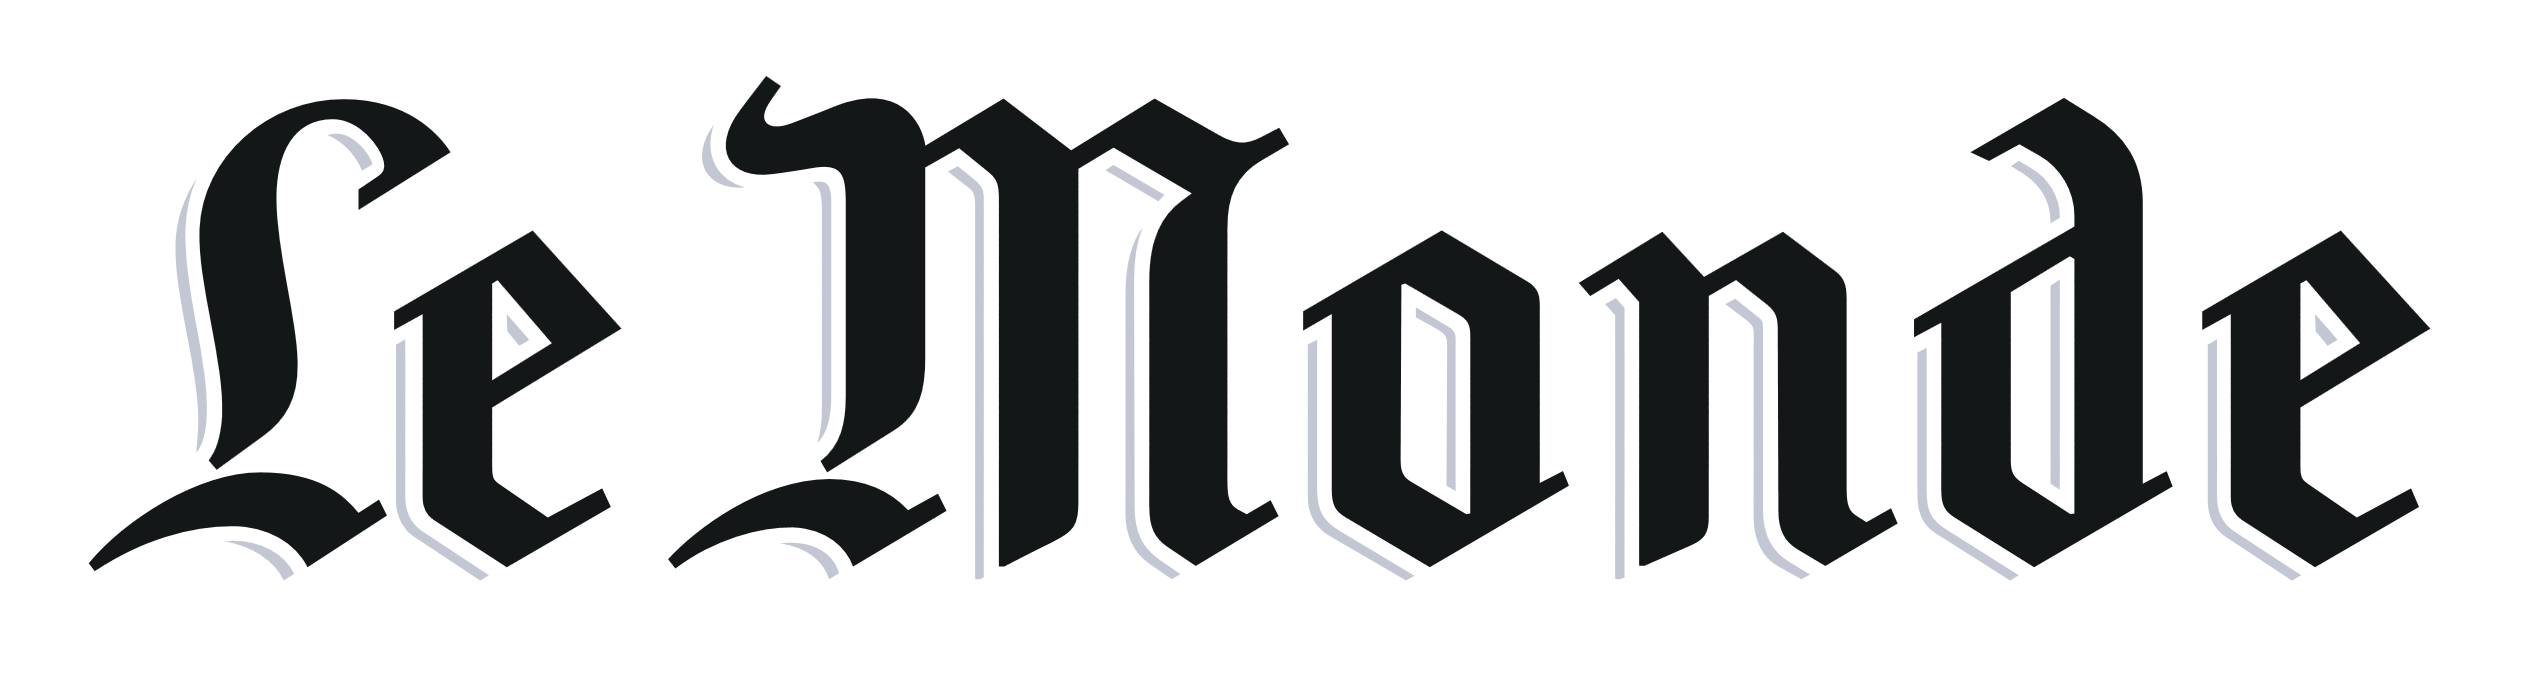 Le Monde logo, logotype